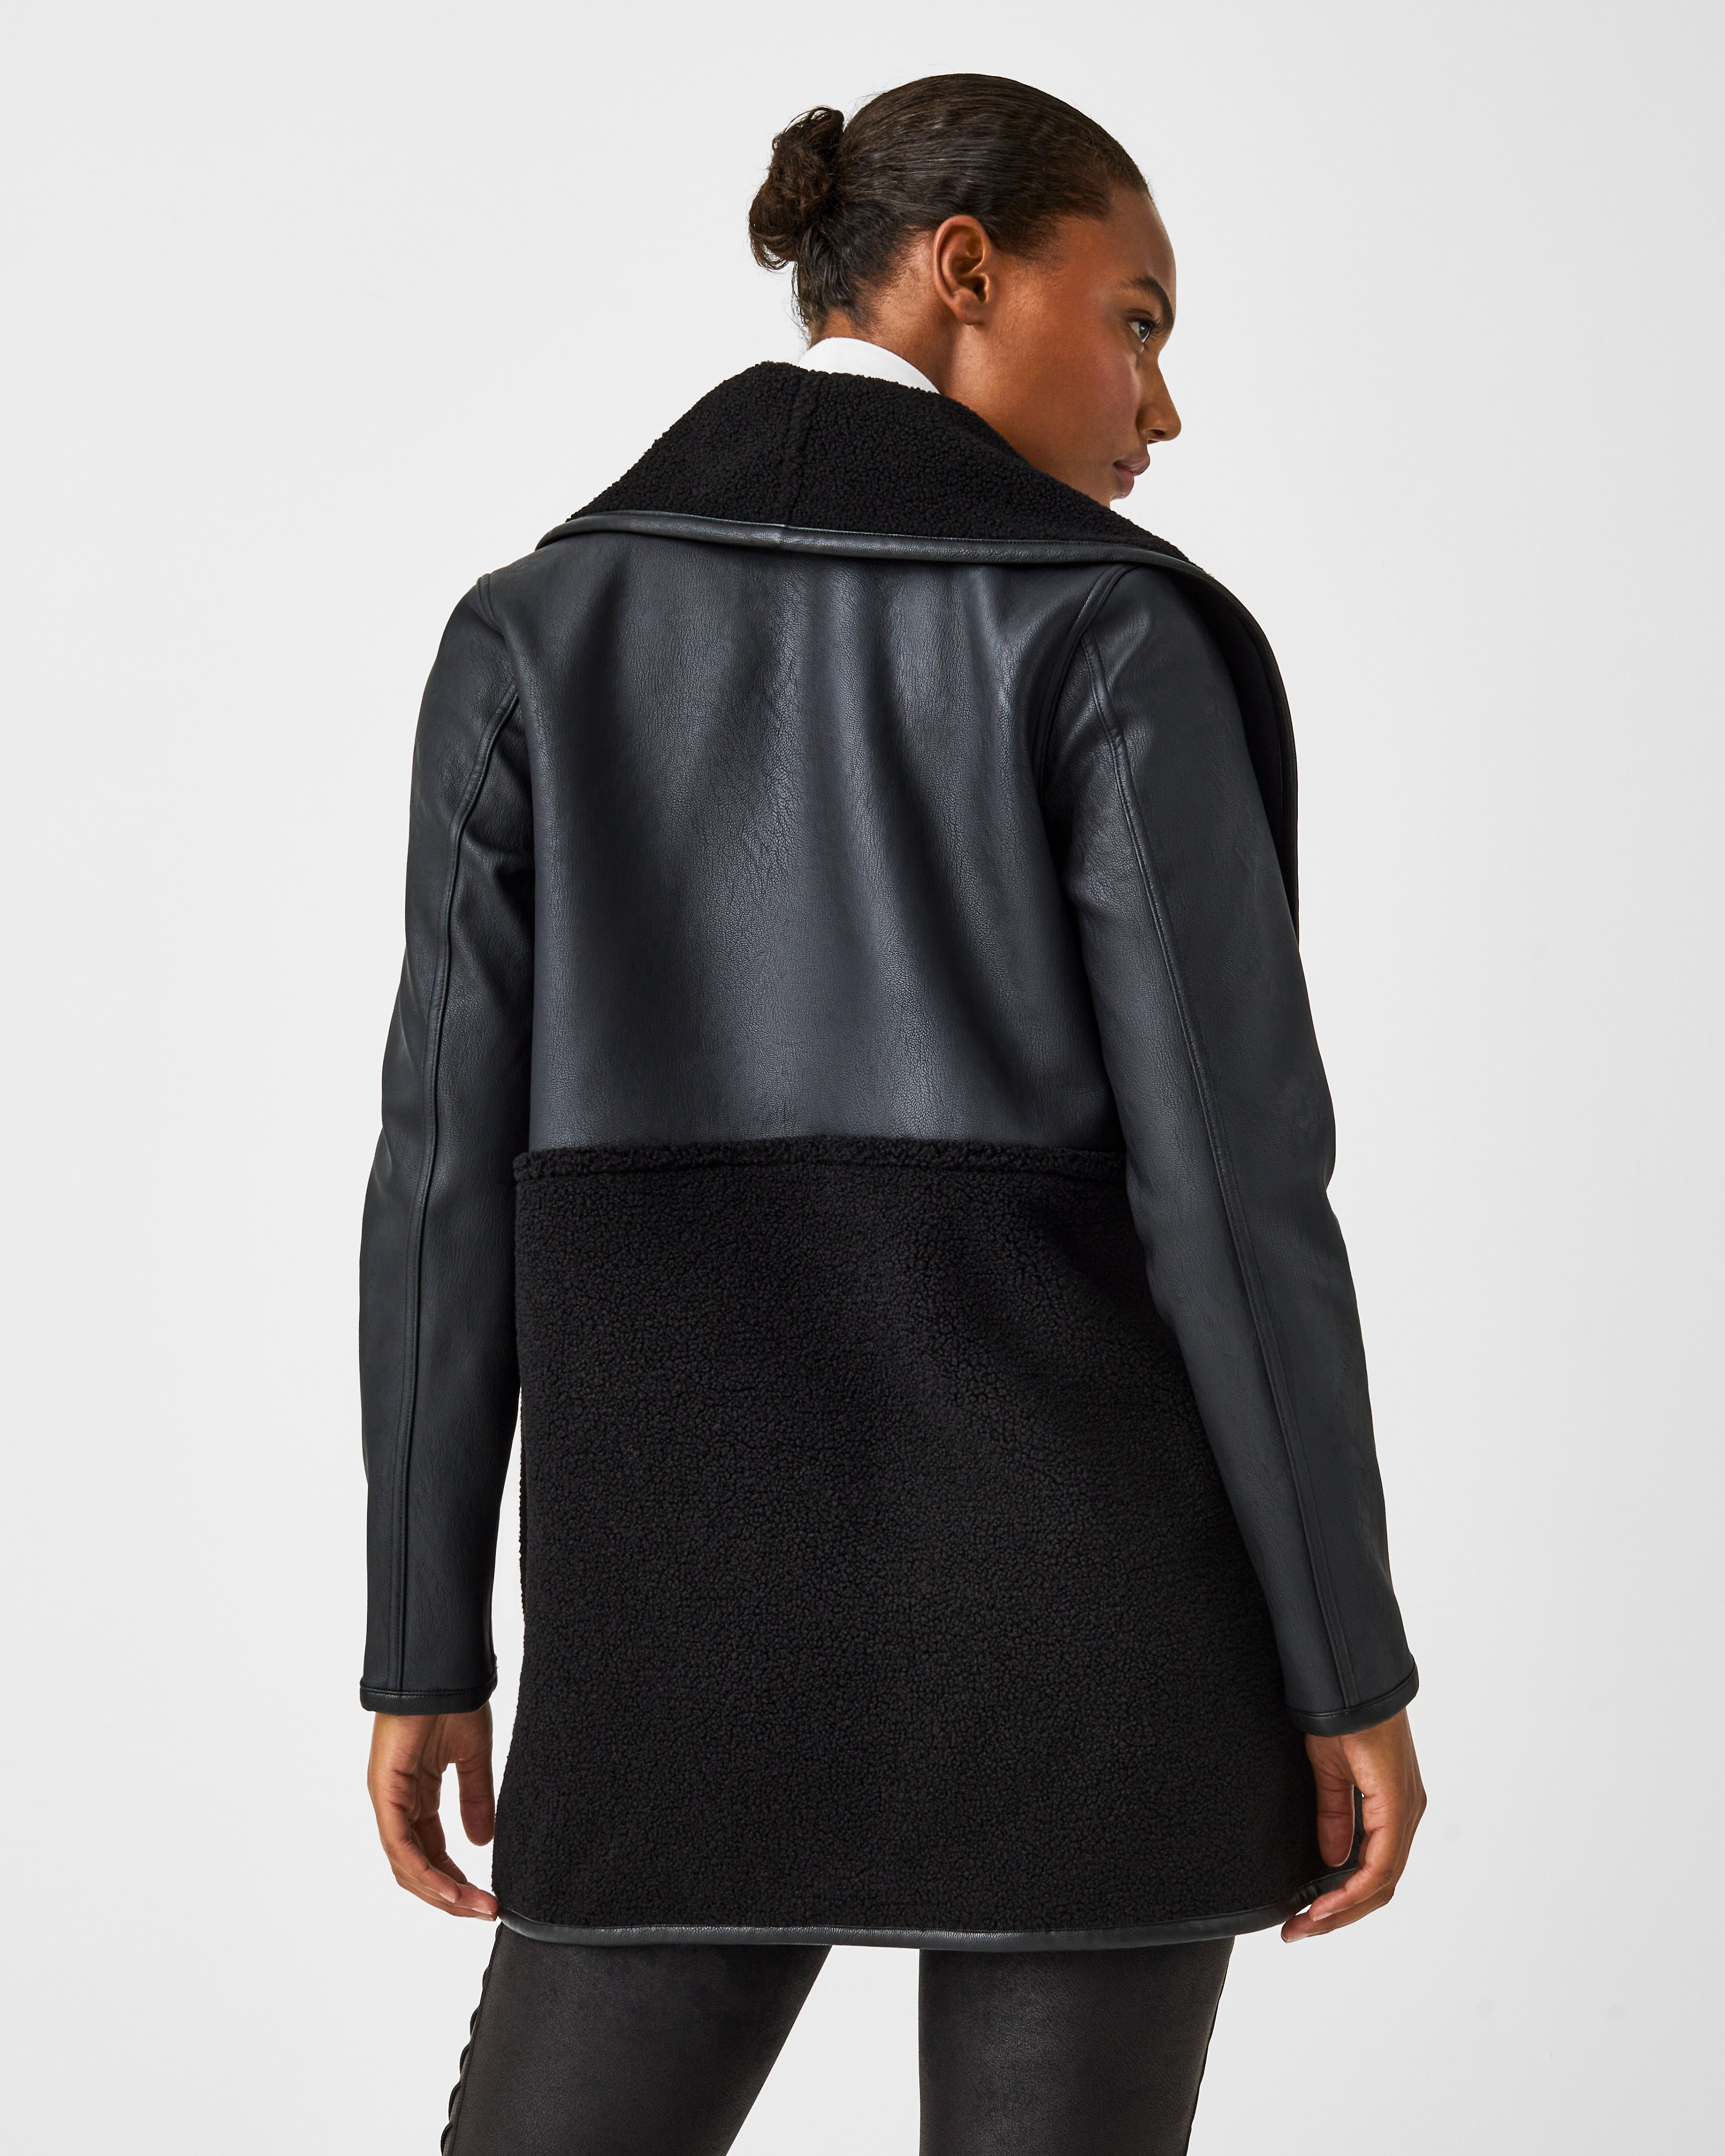 Women's SPANX® Coats